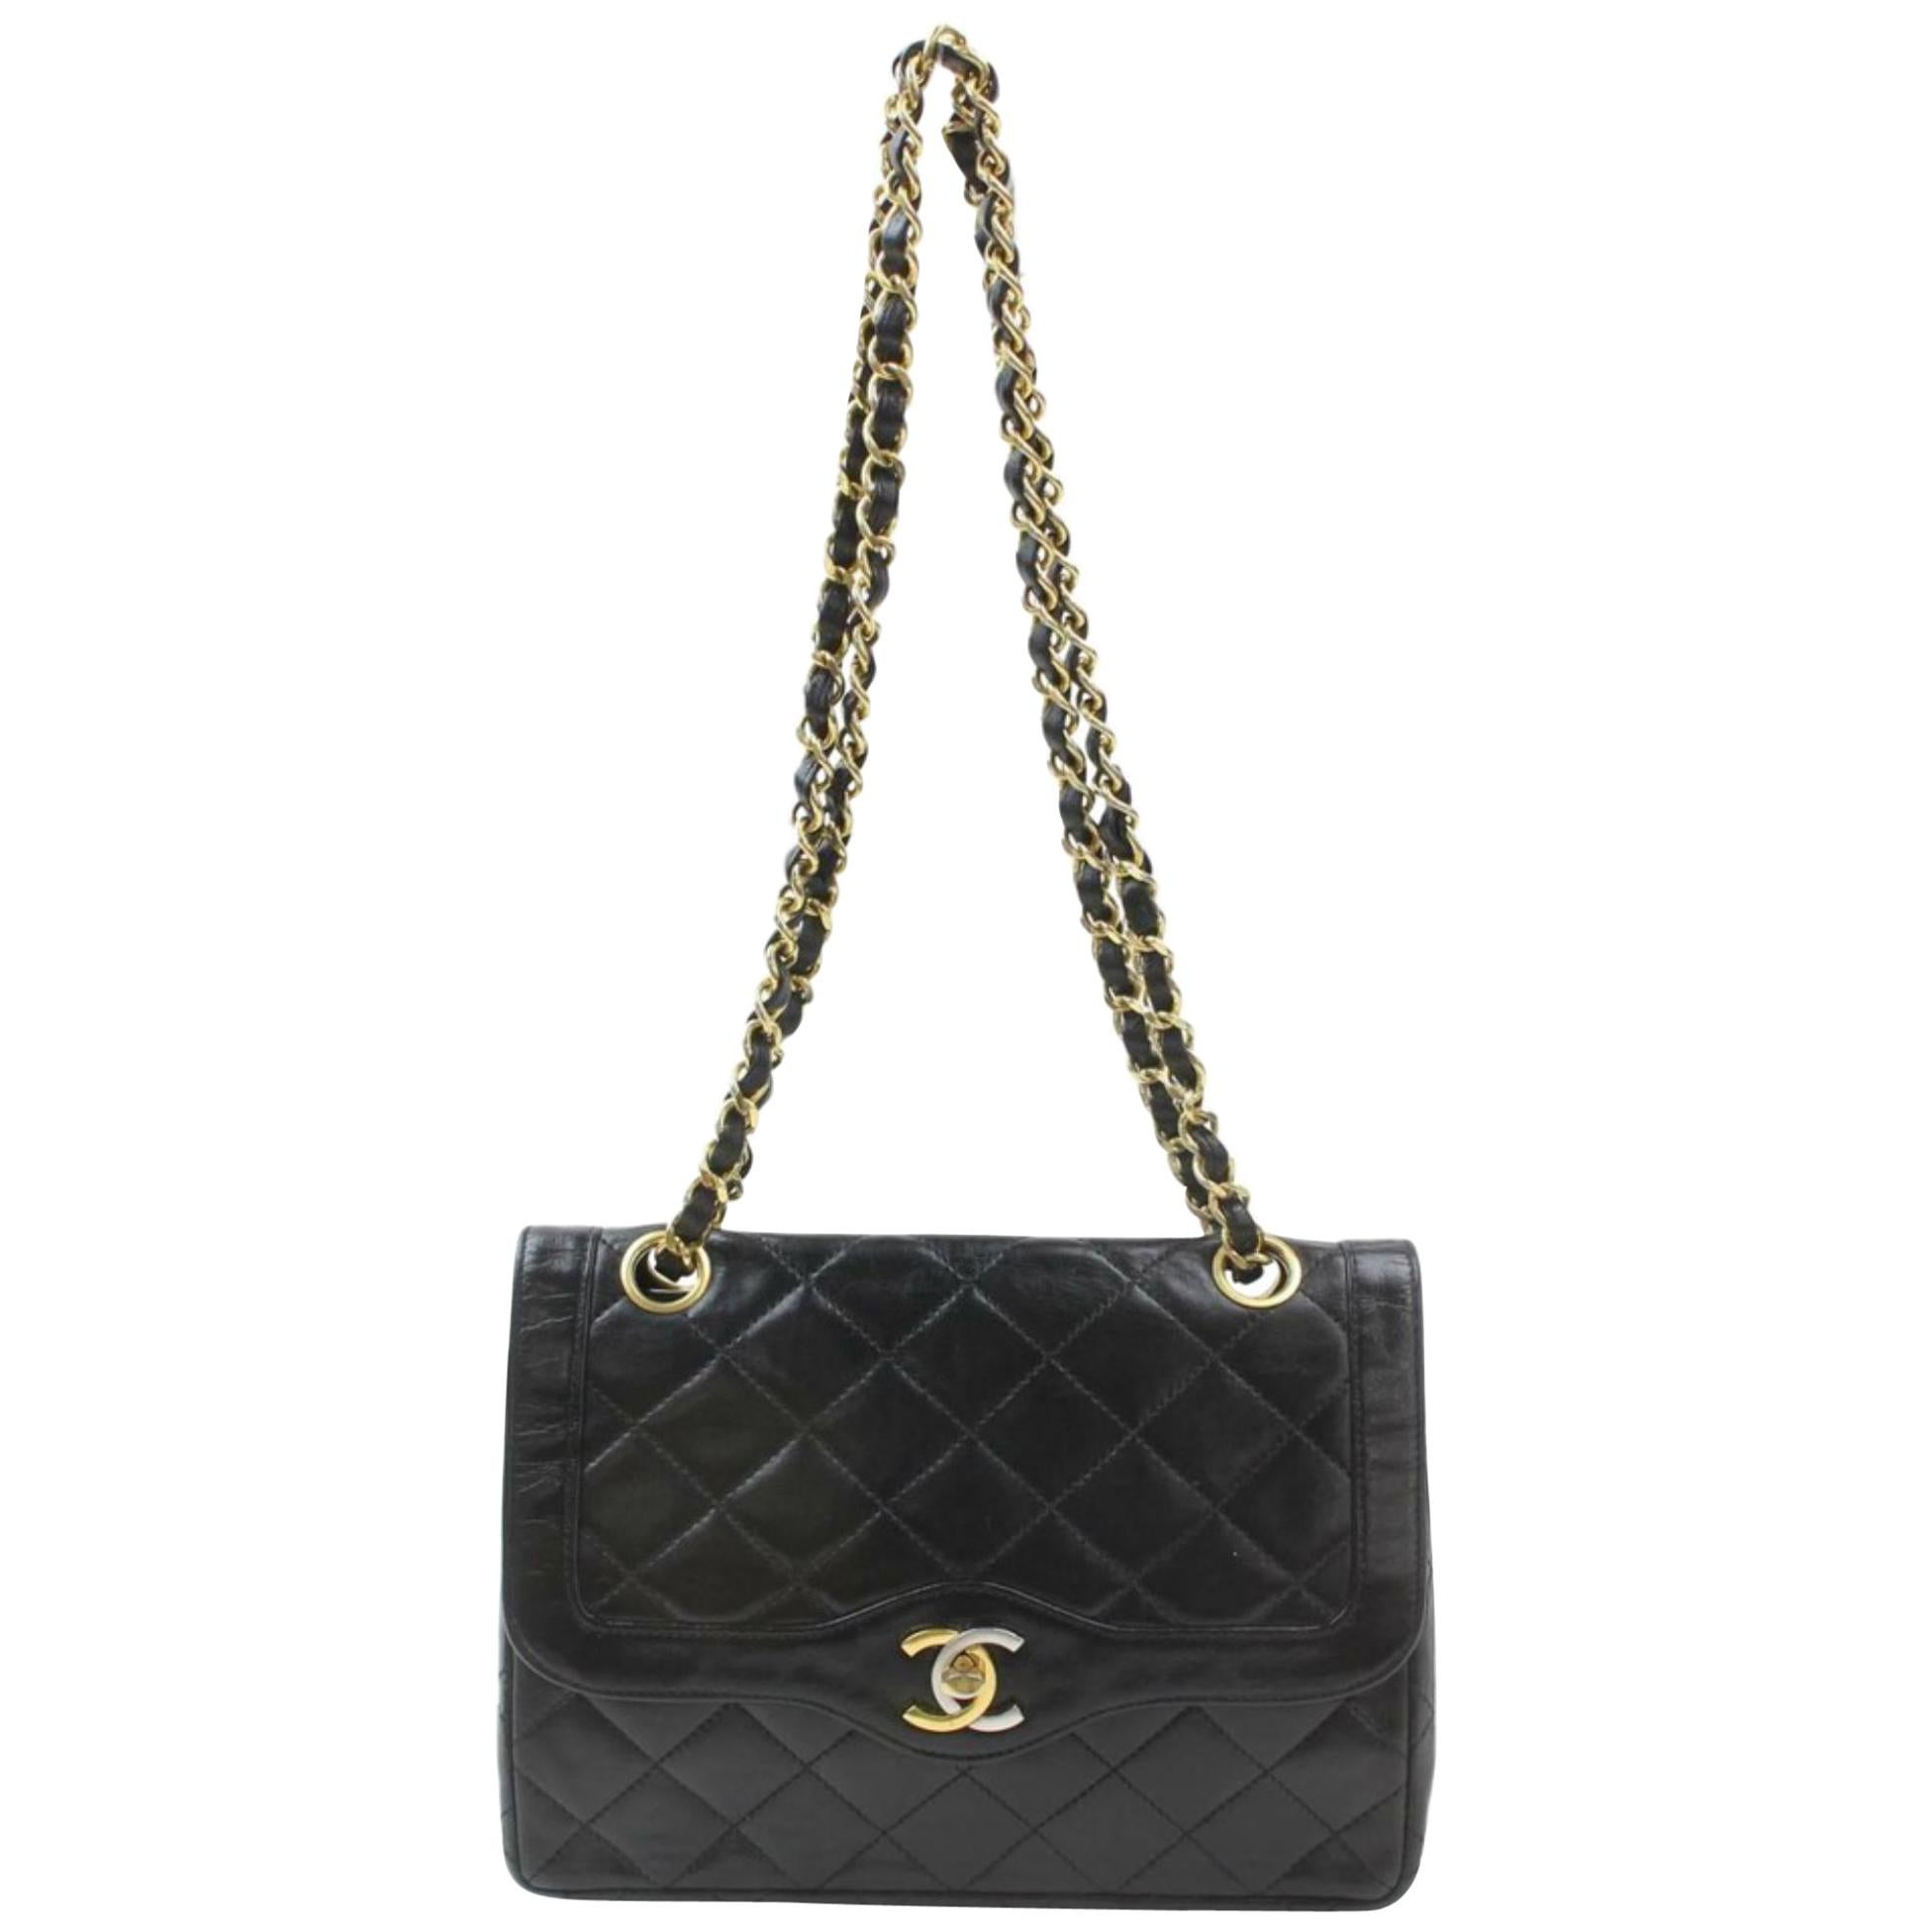 Chanel Handbags Australia Online